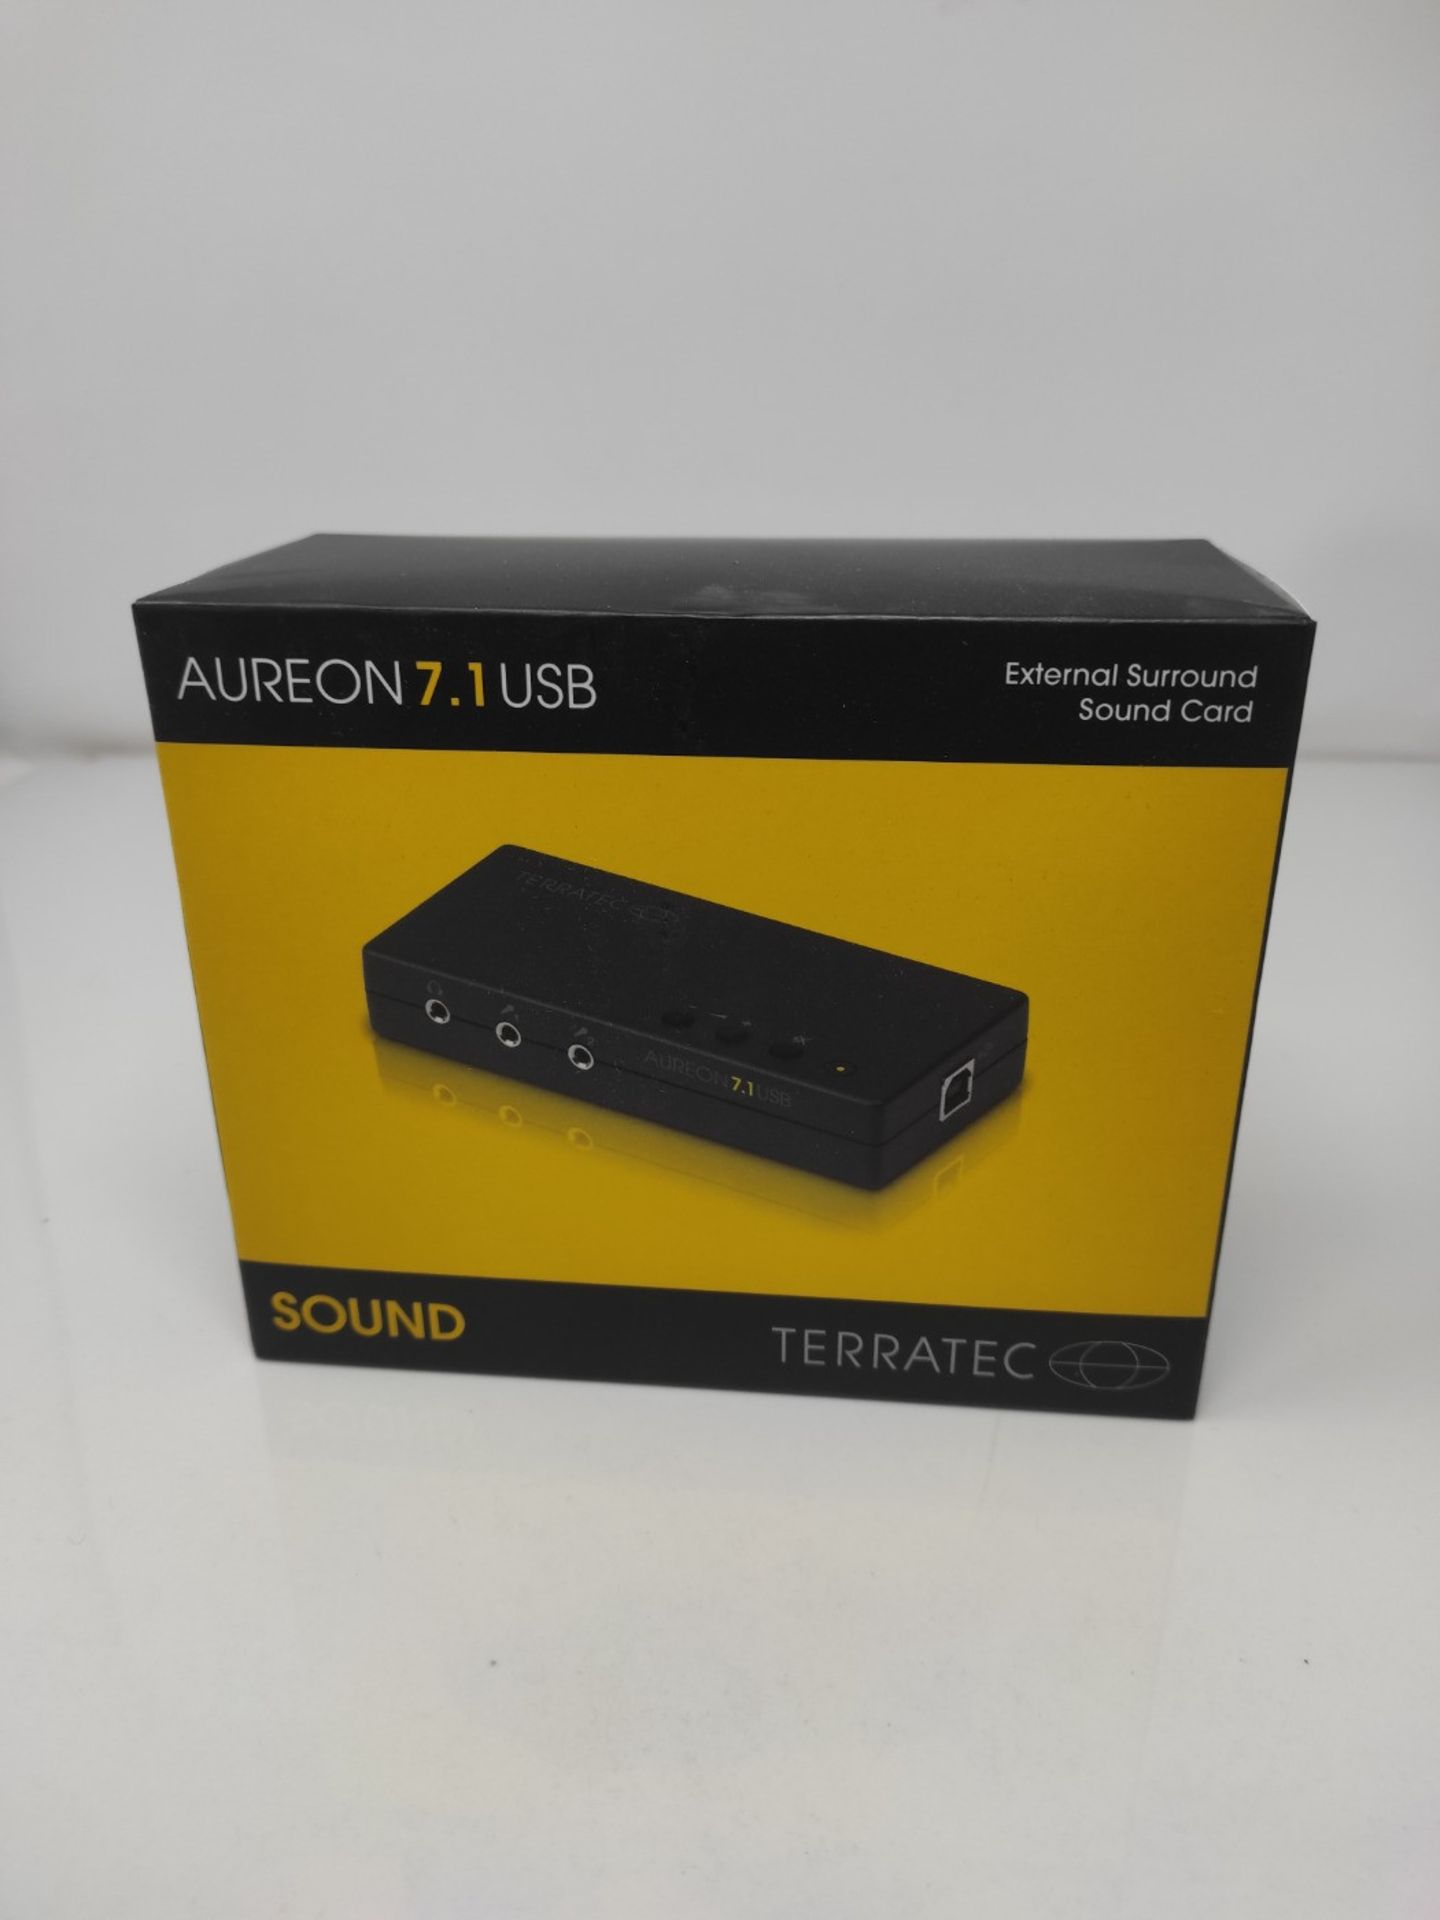 TERRATEC AUREON USB 7.1 PC sound card external 8-channel USB sound box - optical input - Image 2 of 3